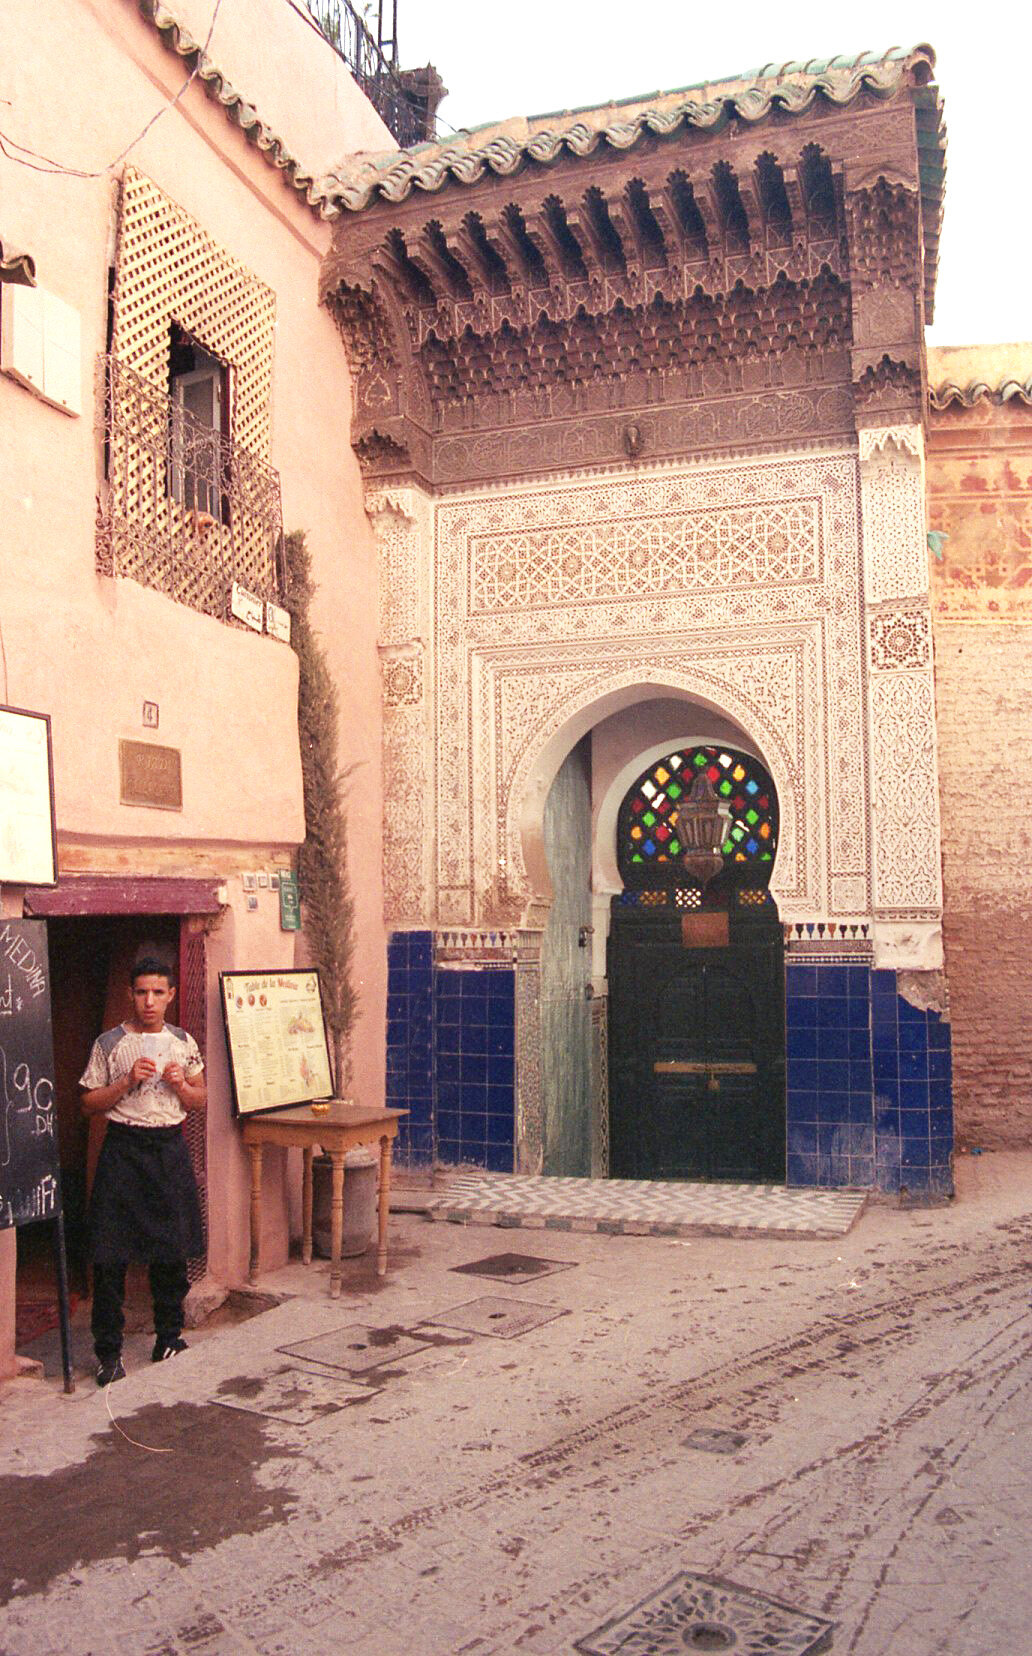   Pausa (2019)   Medina, Marrakech, Morocco  Kodak Portra Film  